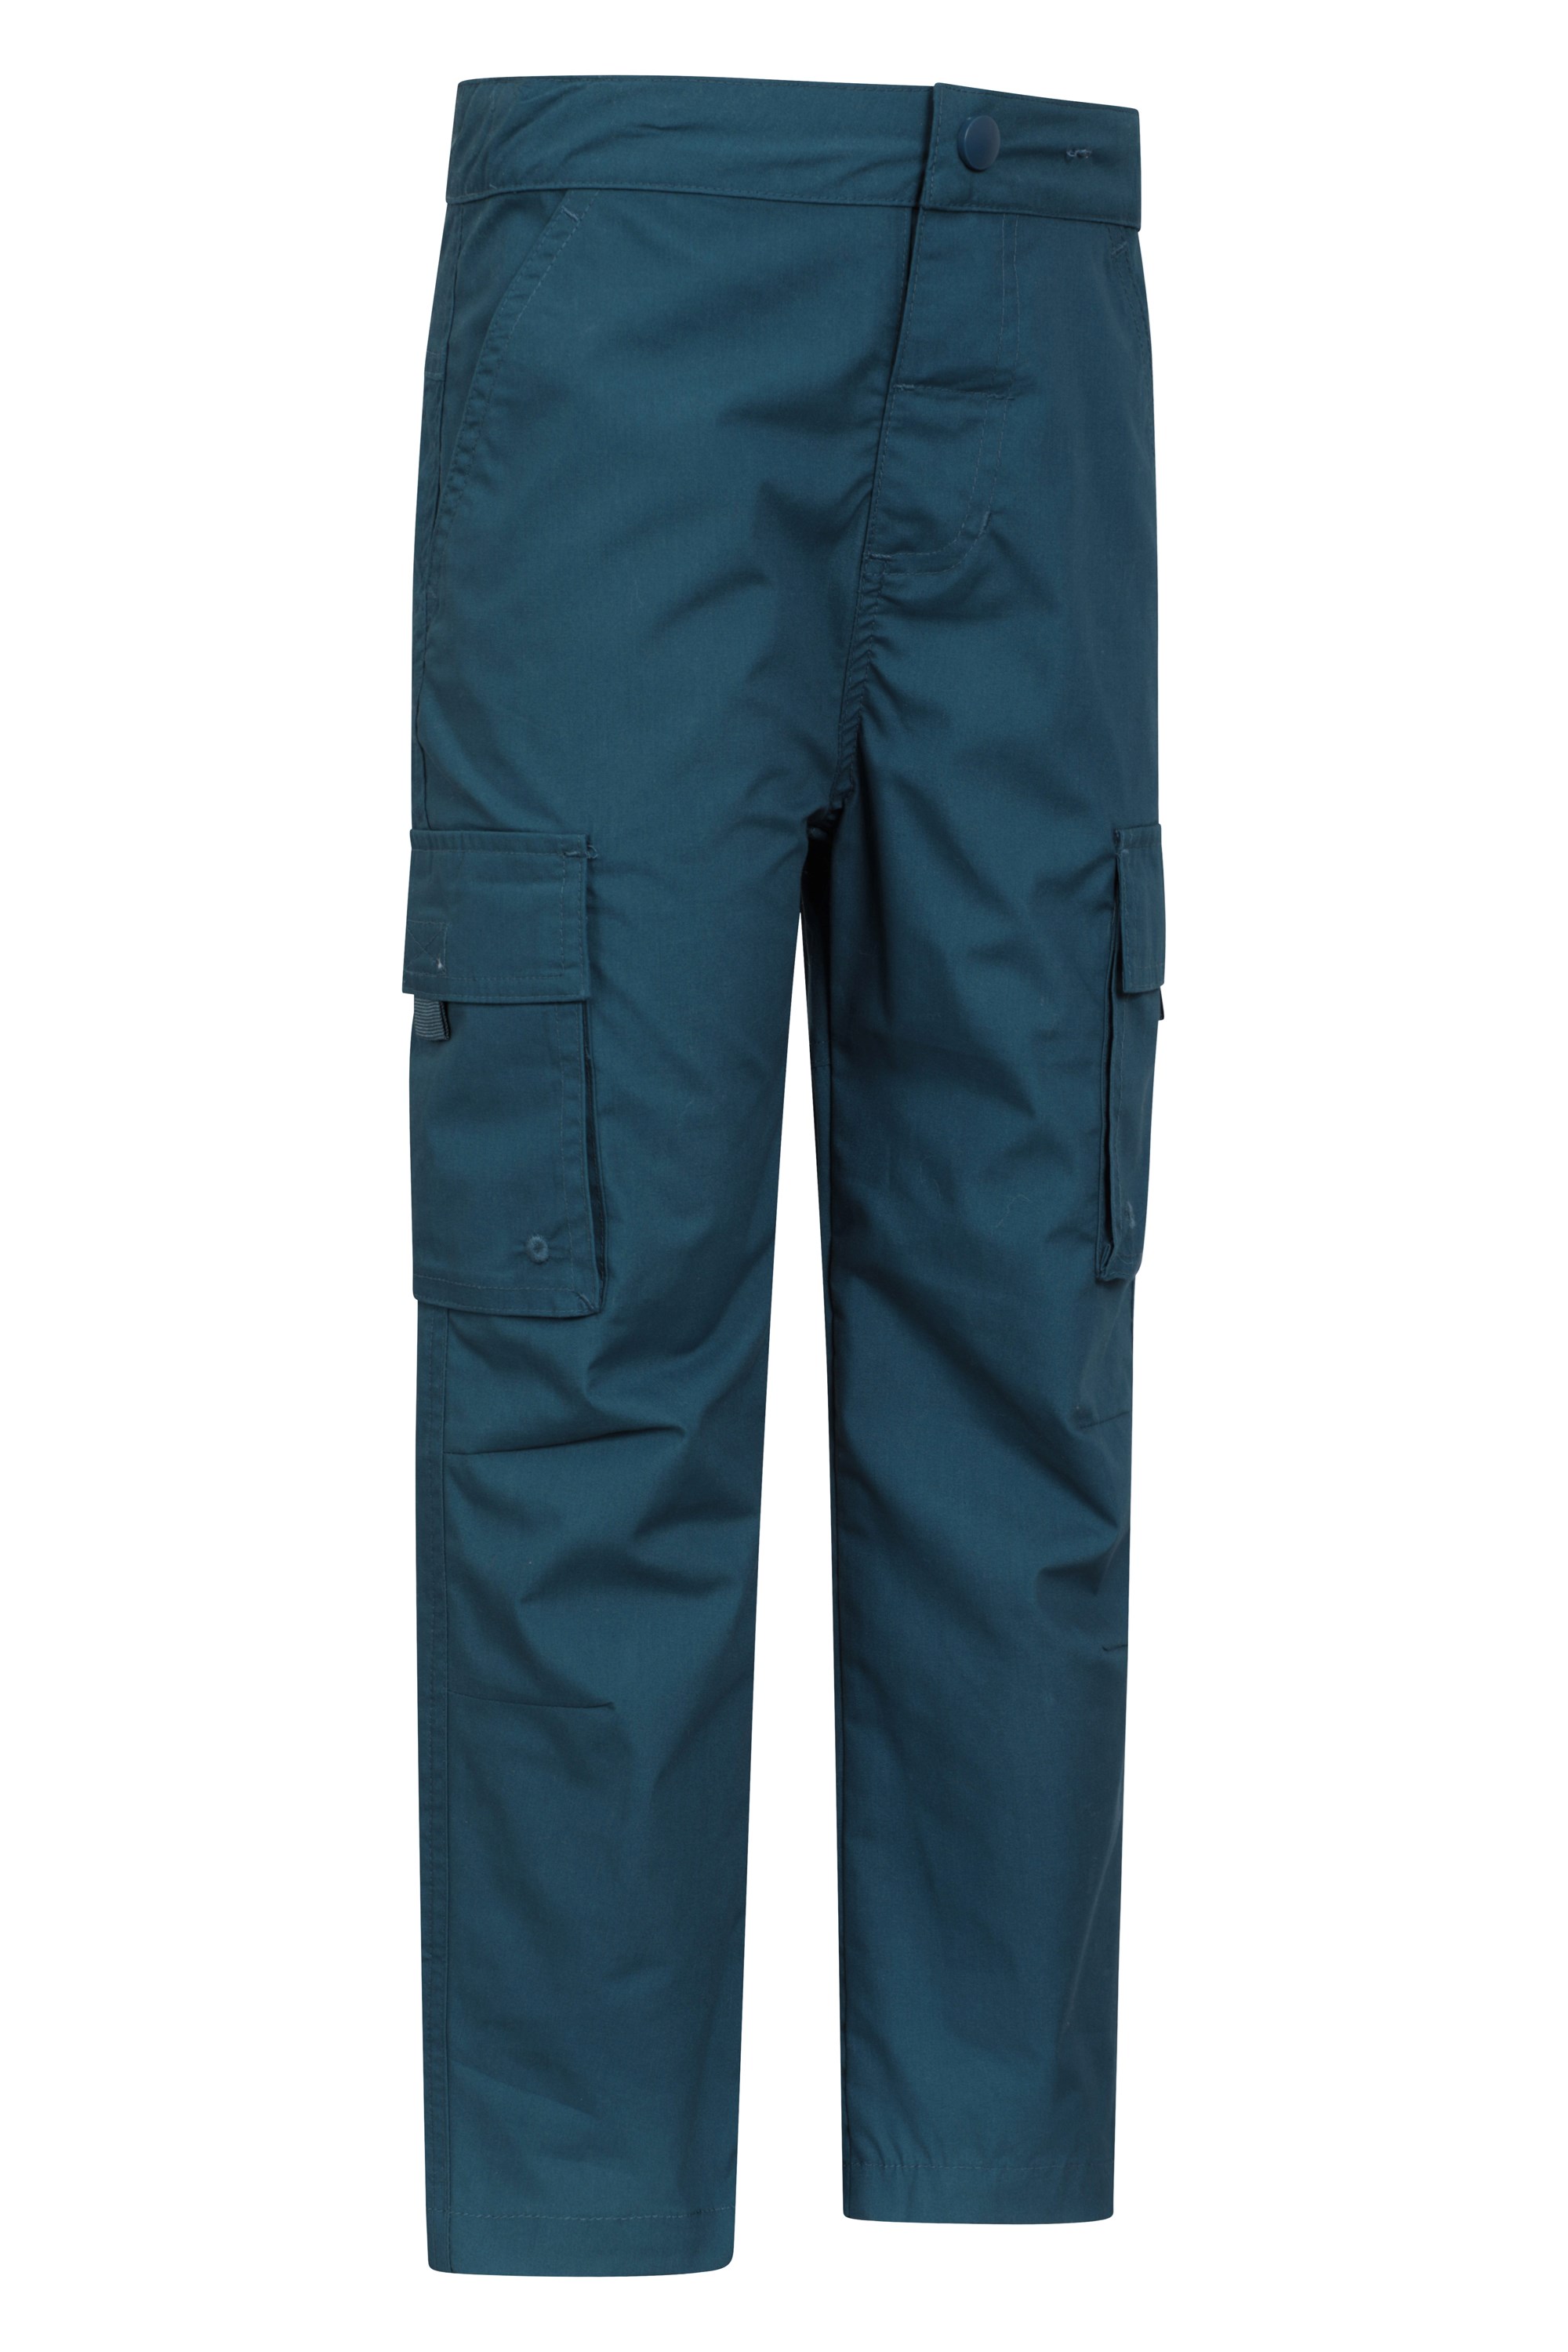 Xersion Men's Active Wear Pants Size Large Blue on eBid United States |  216280096